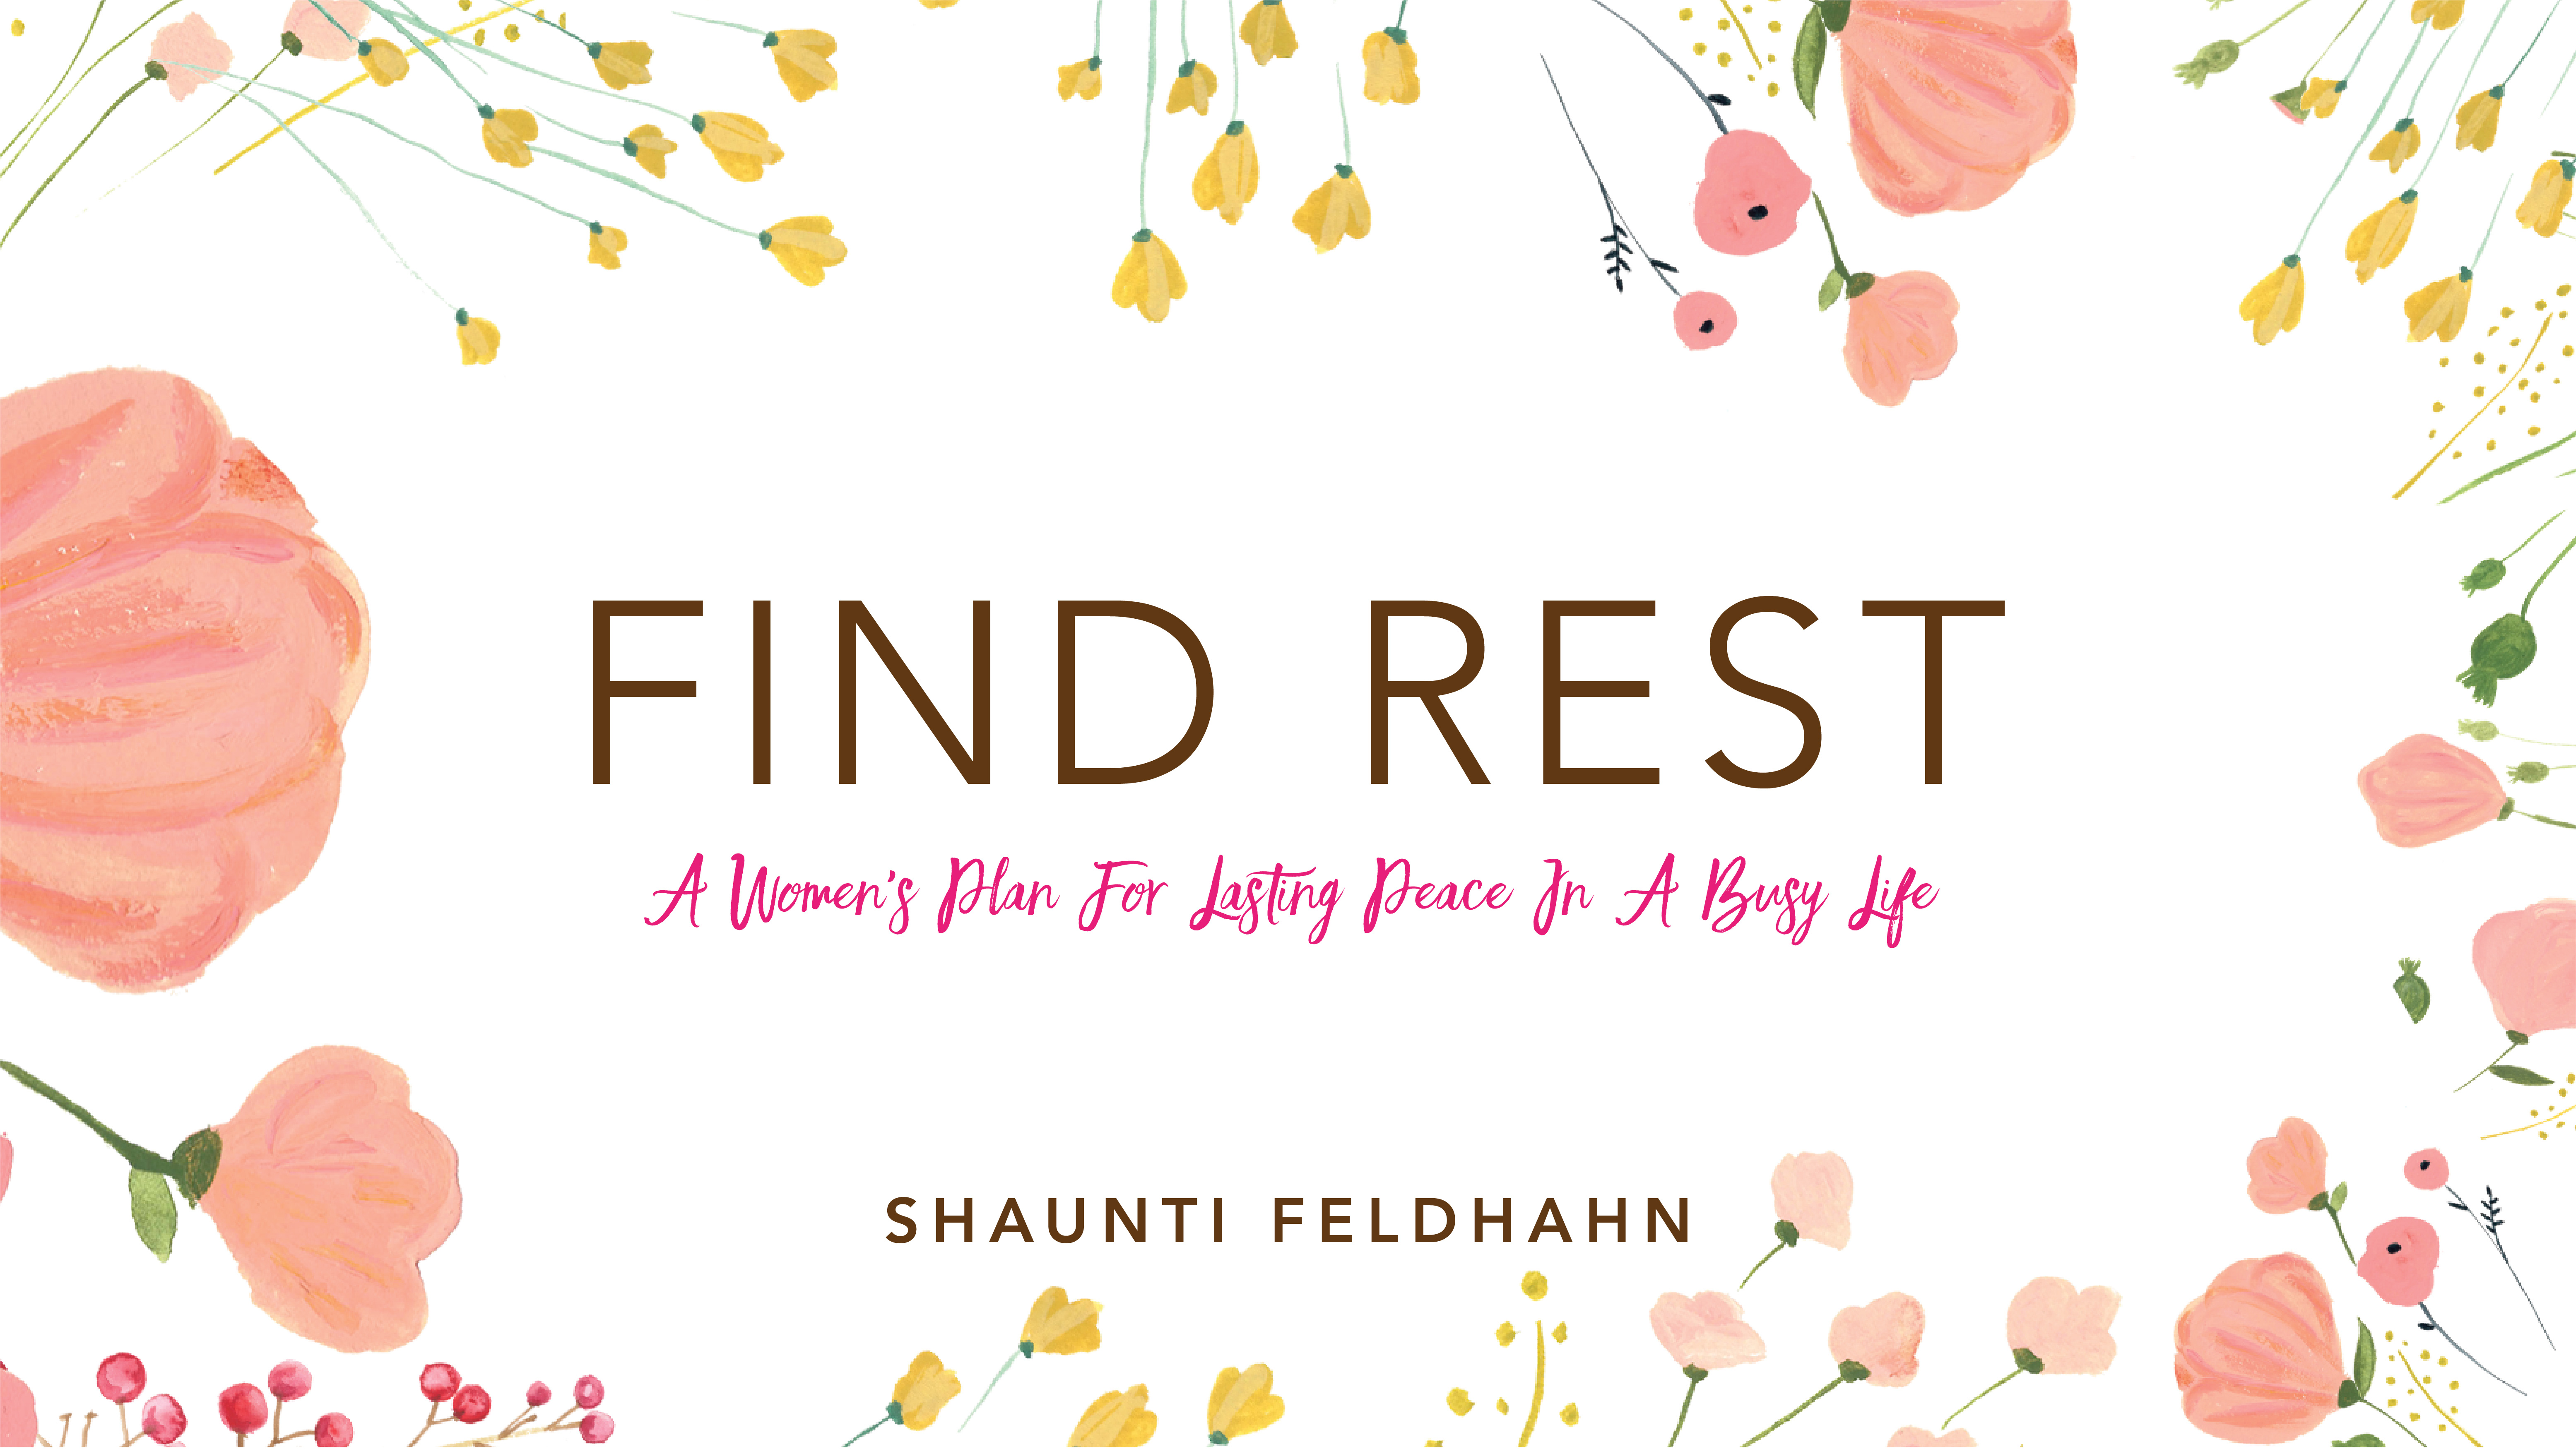 Find Rest with Shaunti Feldhahn